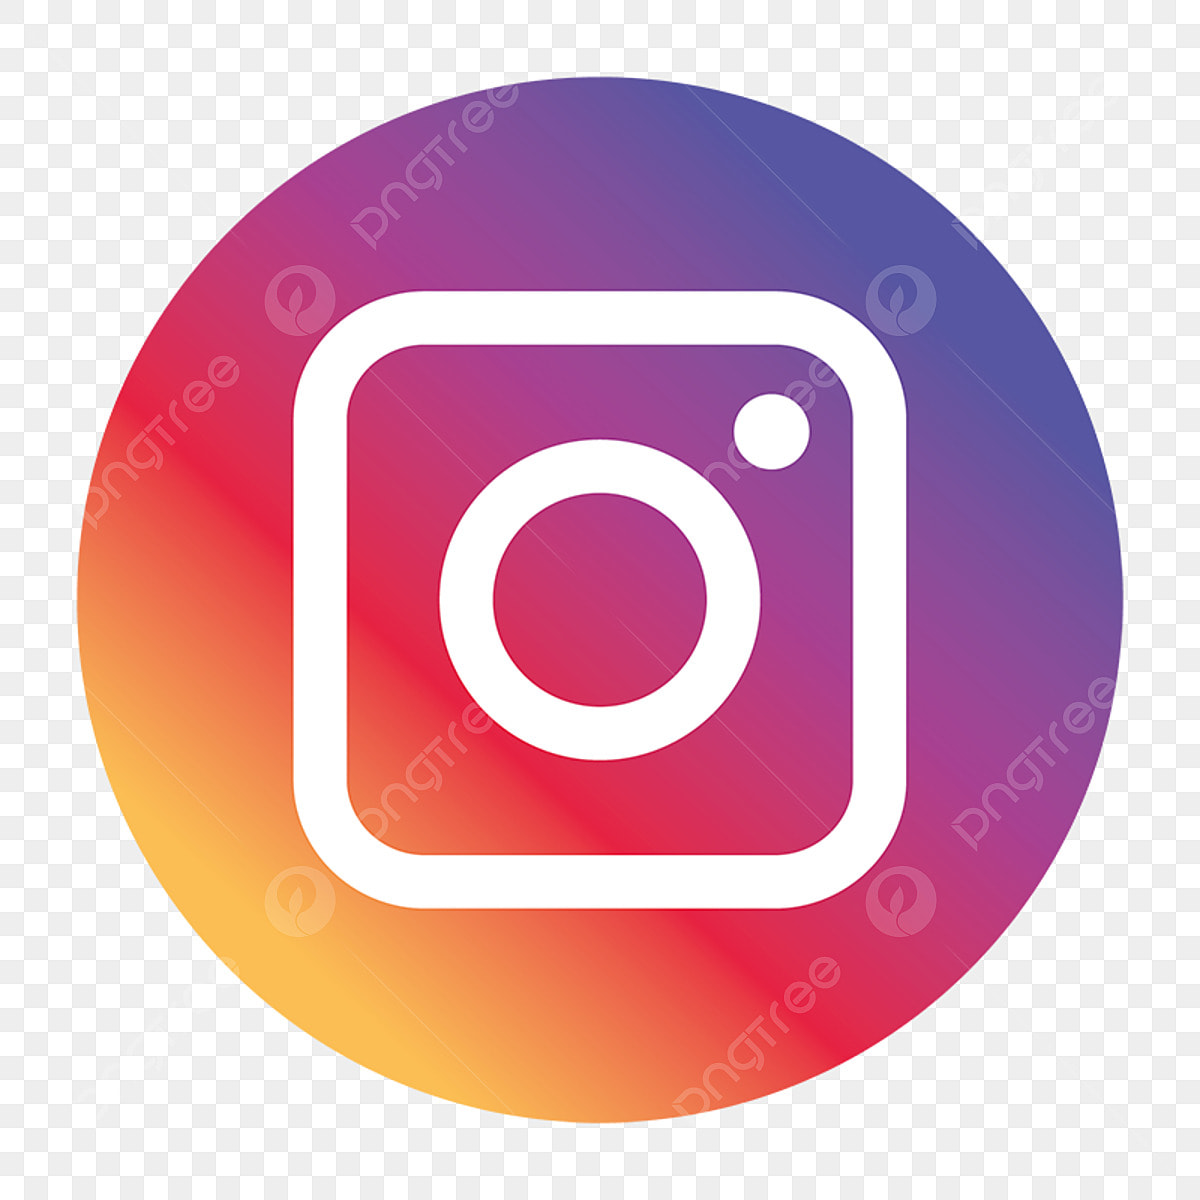 pngtree-instagram-logo-icon-png-image_3588821.jpg